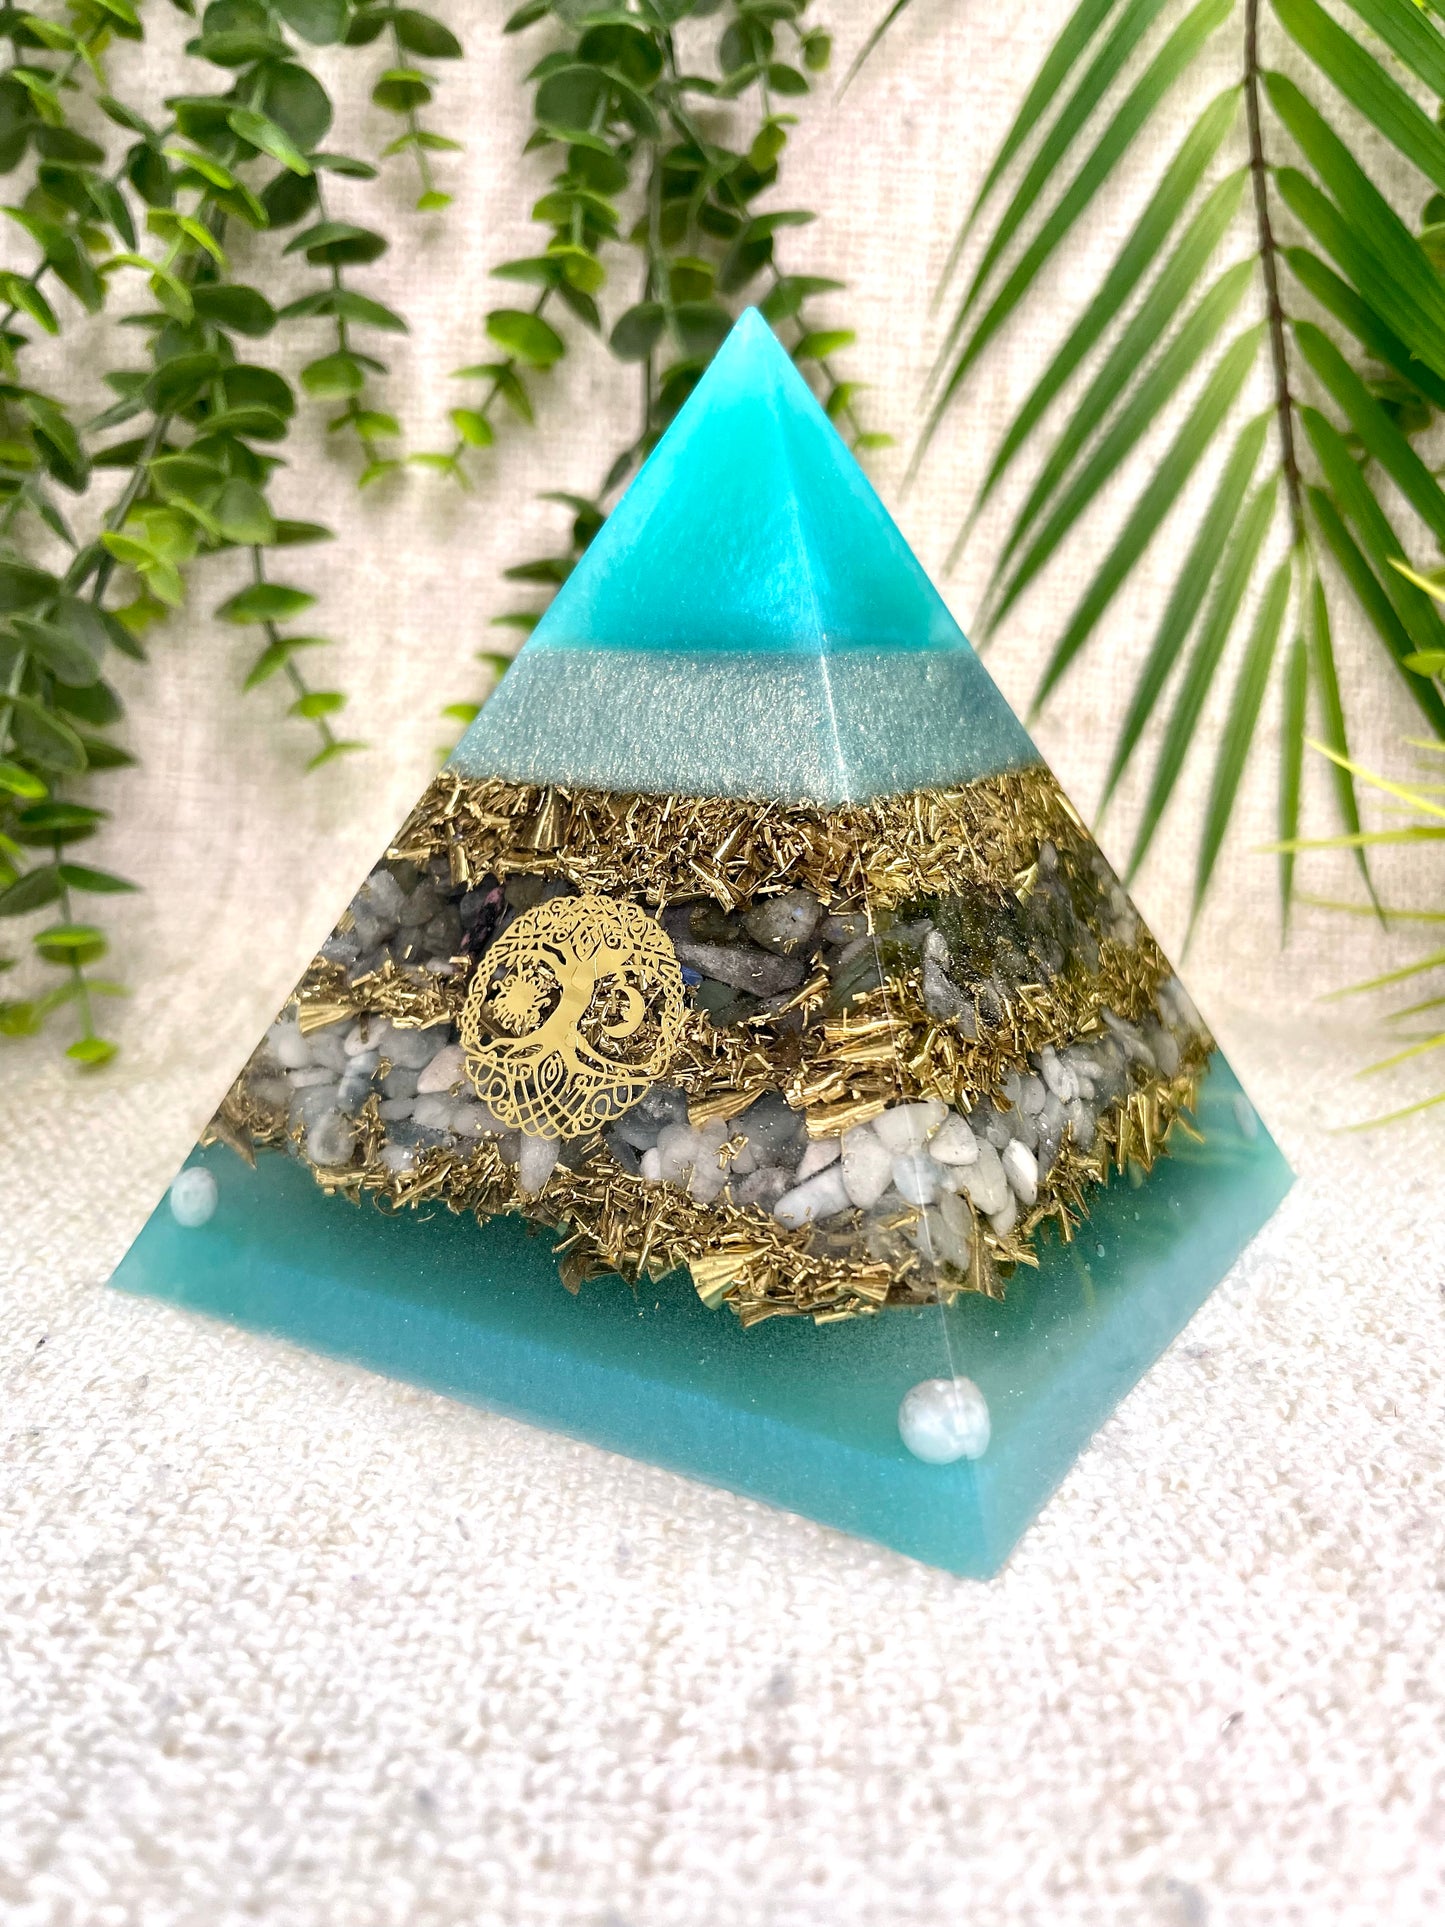 PISCES - Astrology Edition - Orgonite Pyramid - EMF Protector - Labradorite, Aquamarine, Smithsonite and Brass Metals